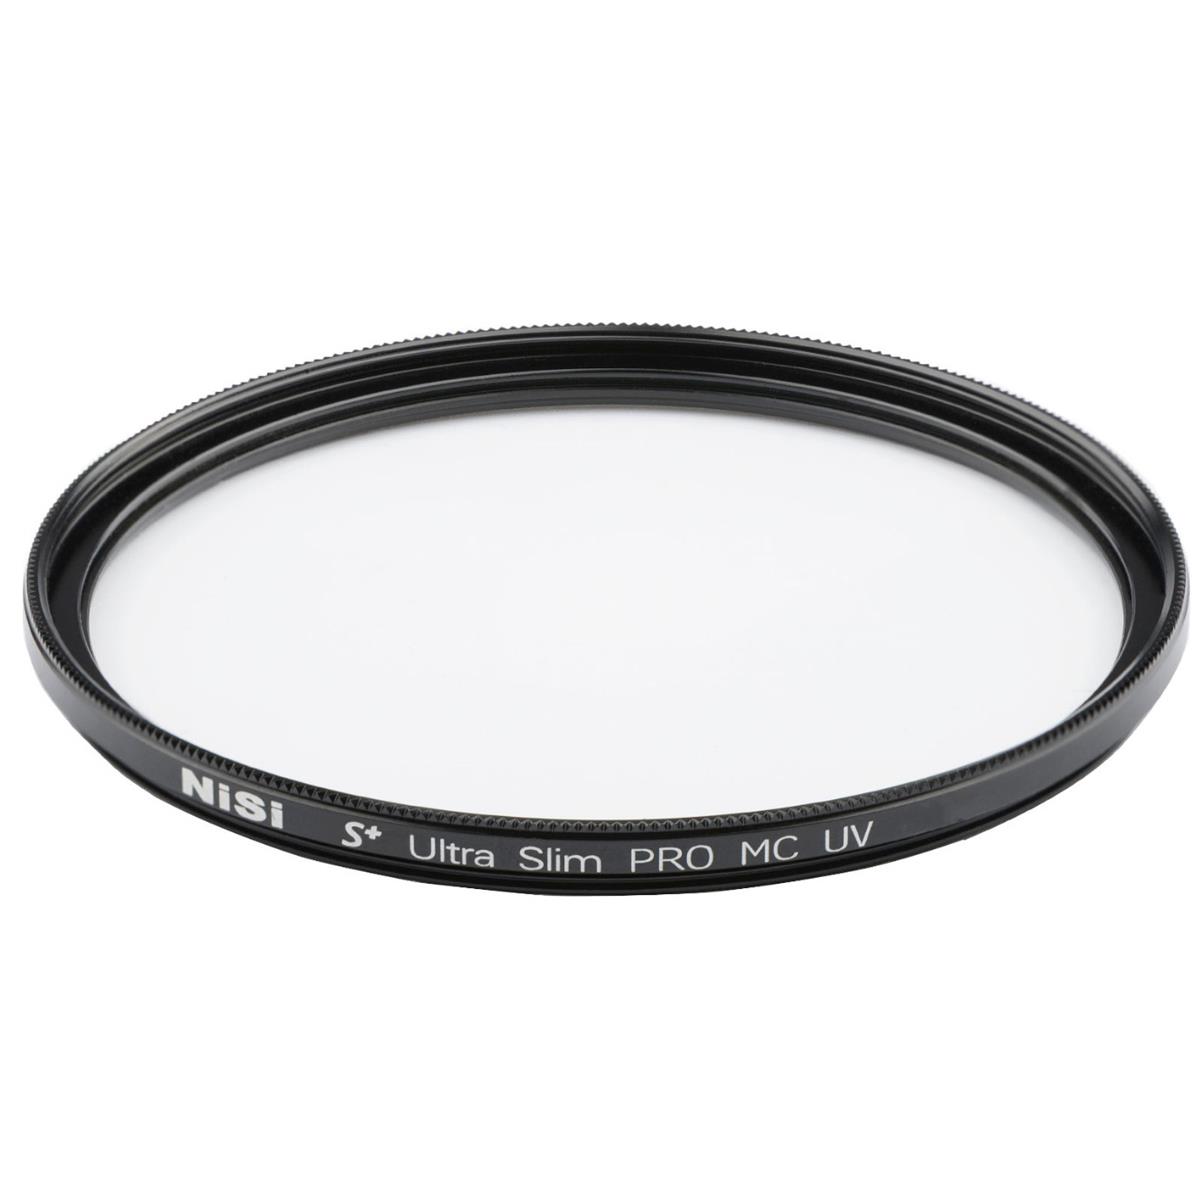 NiSi 95mm S+ Ultra Slim Pro MC UV Filter (Adorama Exclusive) nisi 95mm titanium frame pro nano uv cut 395 filter